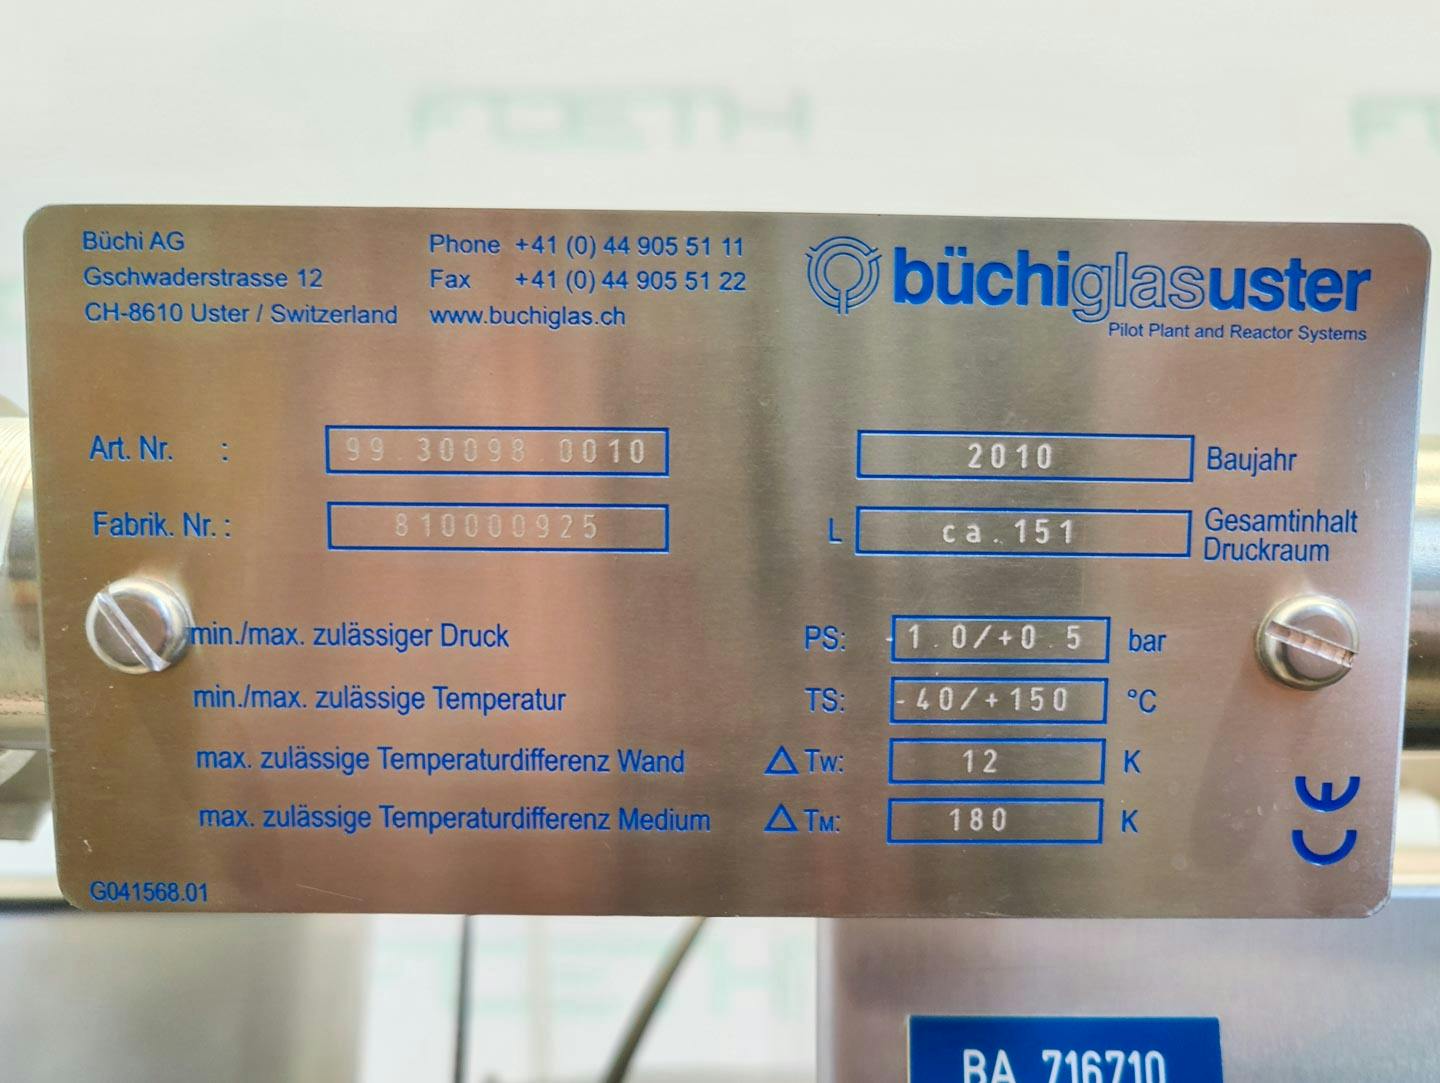 Büchi Filter 140 Ltr. (Ex) - filter reactor - Nutschefilter - image 13